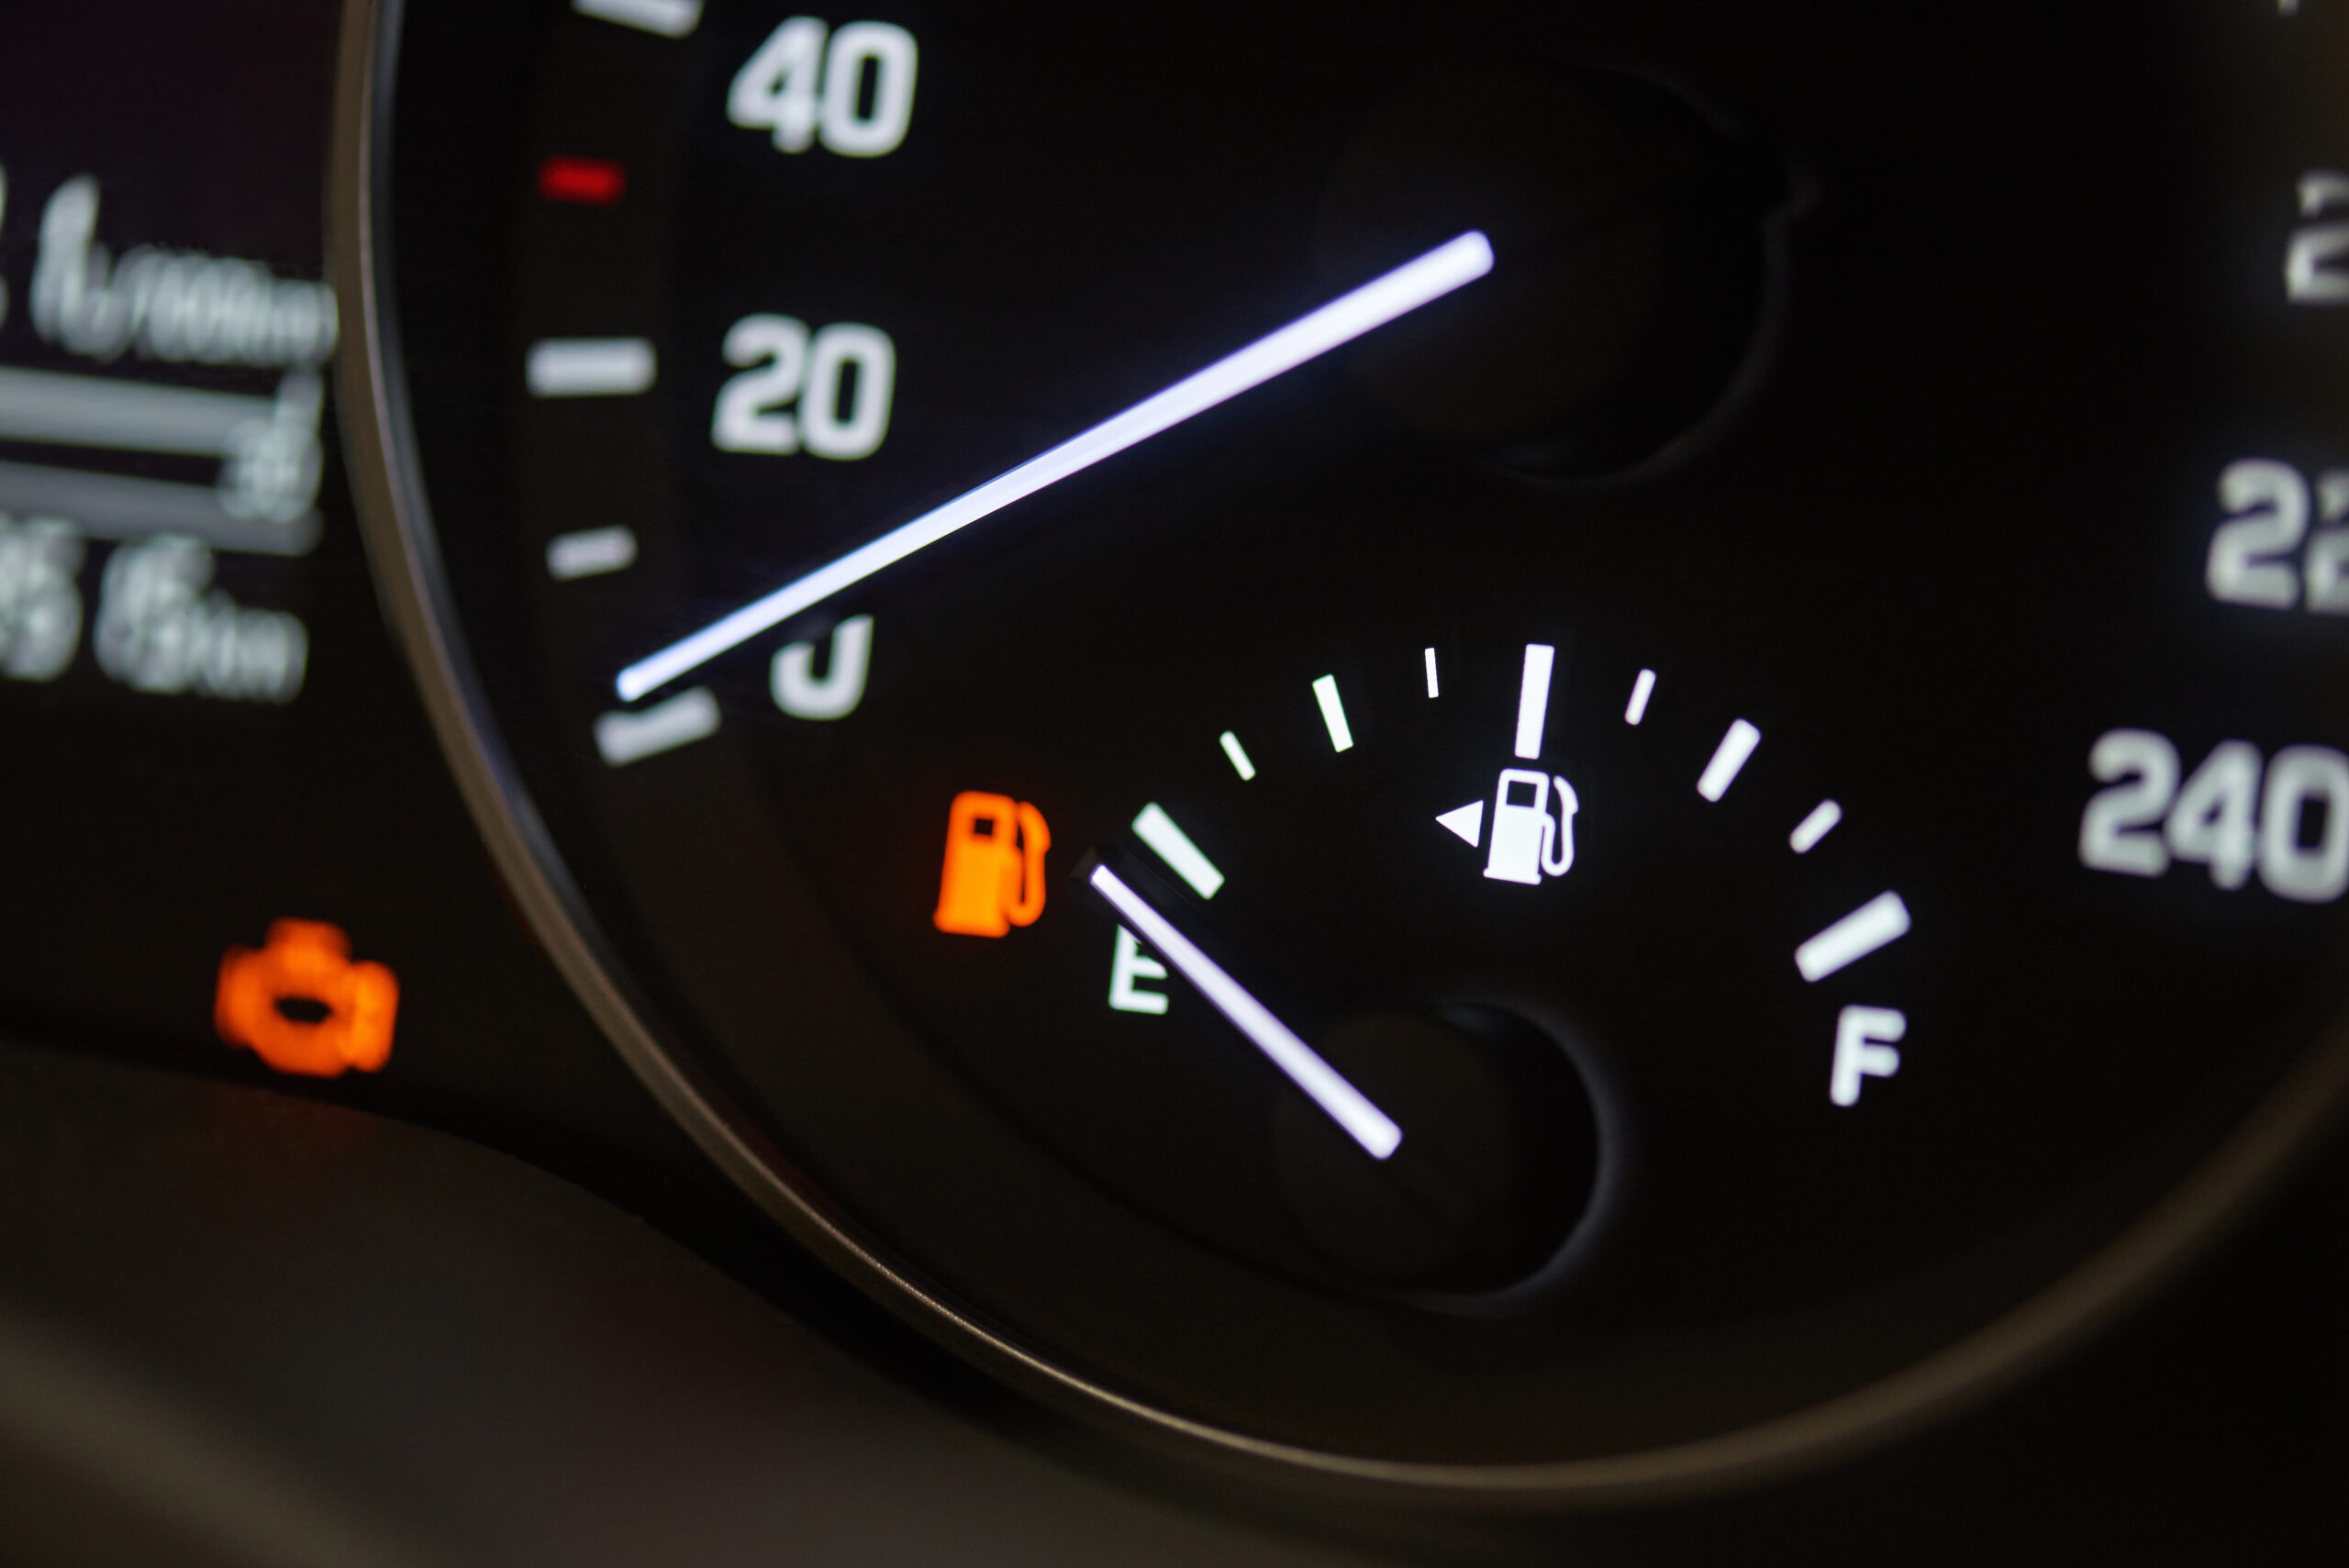 Fuel gage in car reading "empty"